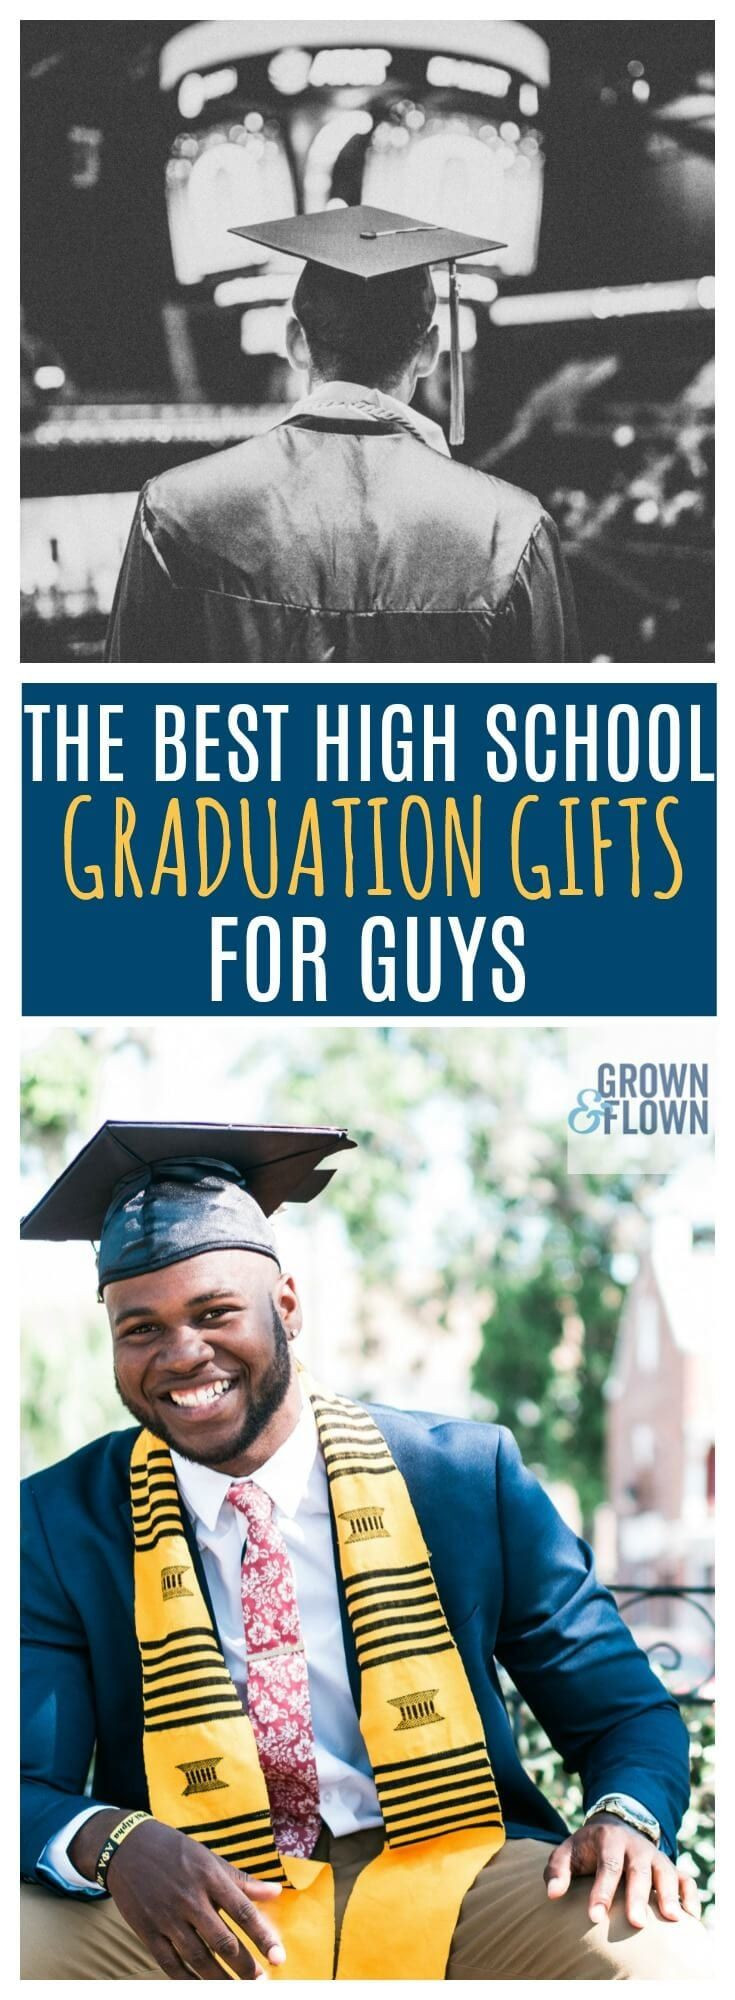 High School Graduation Party Ideas For Him
 2020 High School Graduation Gifts for Guys They Will Love